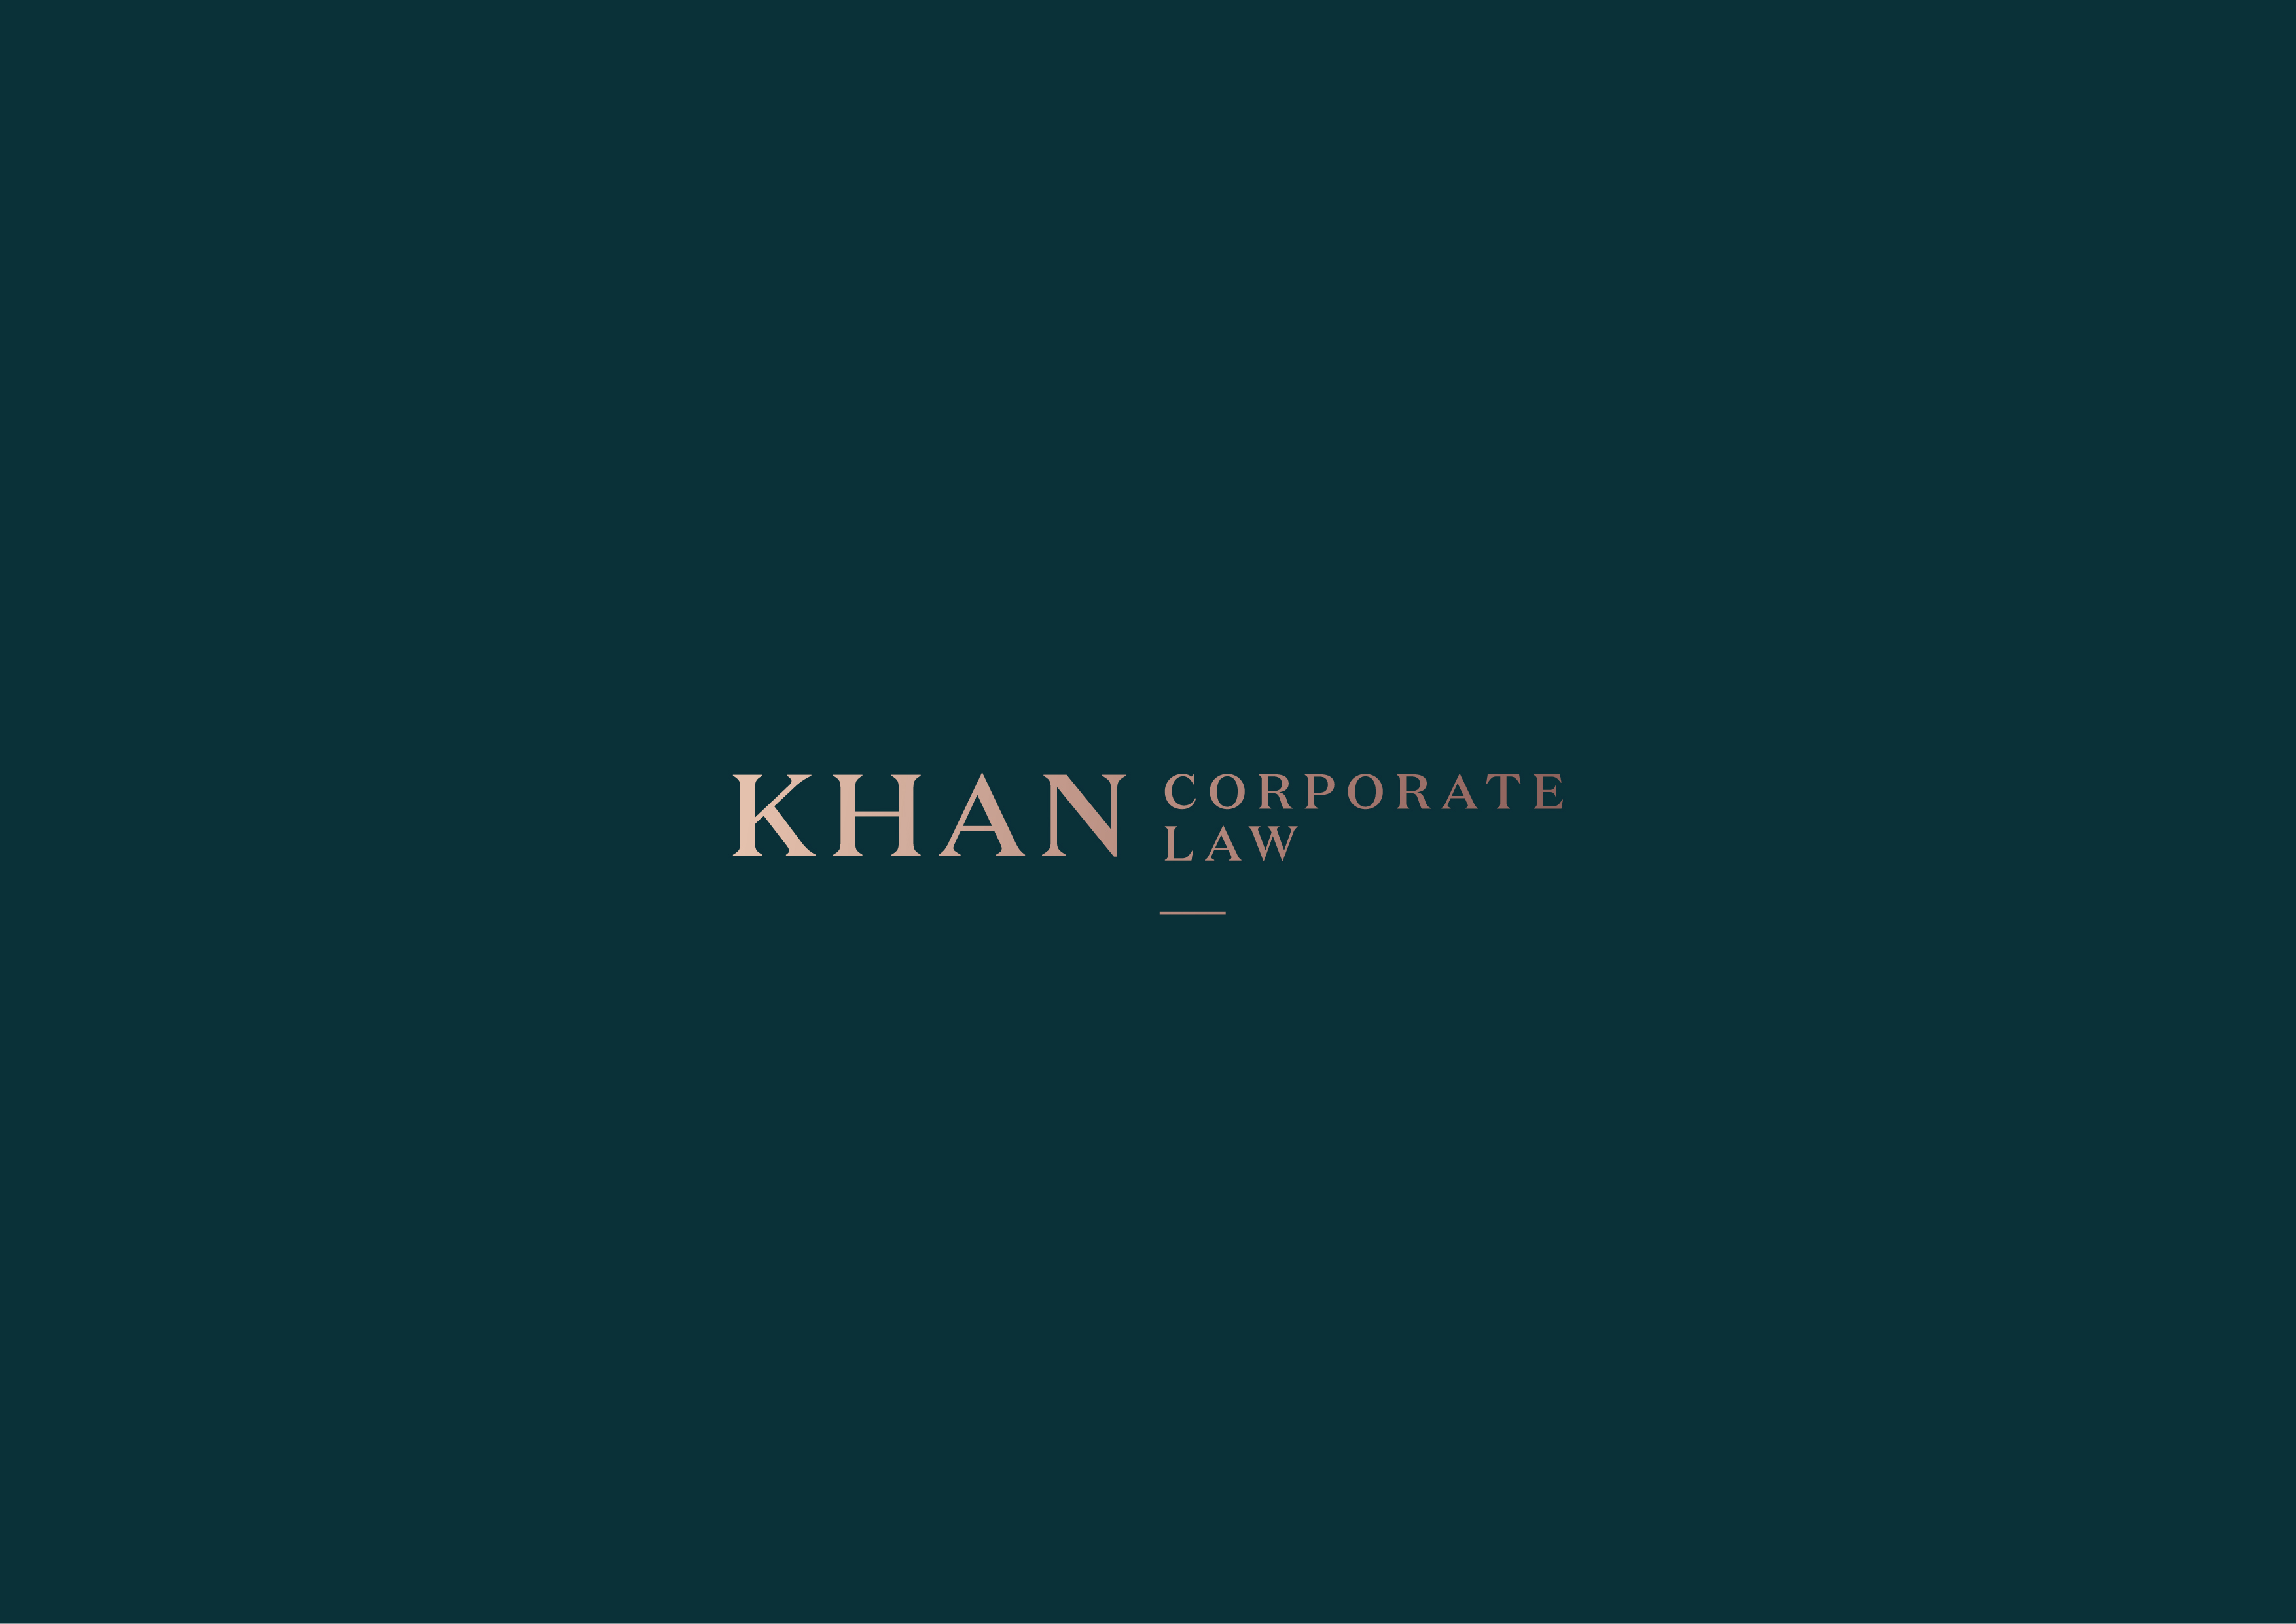 Khan Corporate Law - Botswana - Firm Profile | IFLR1000